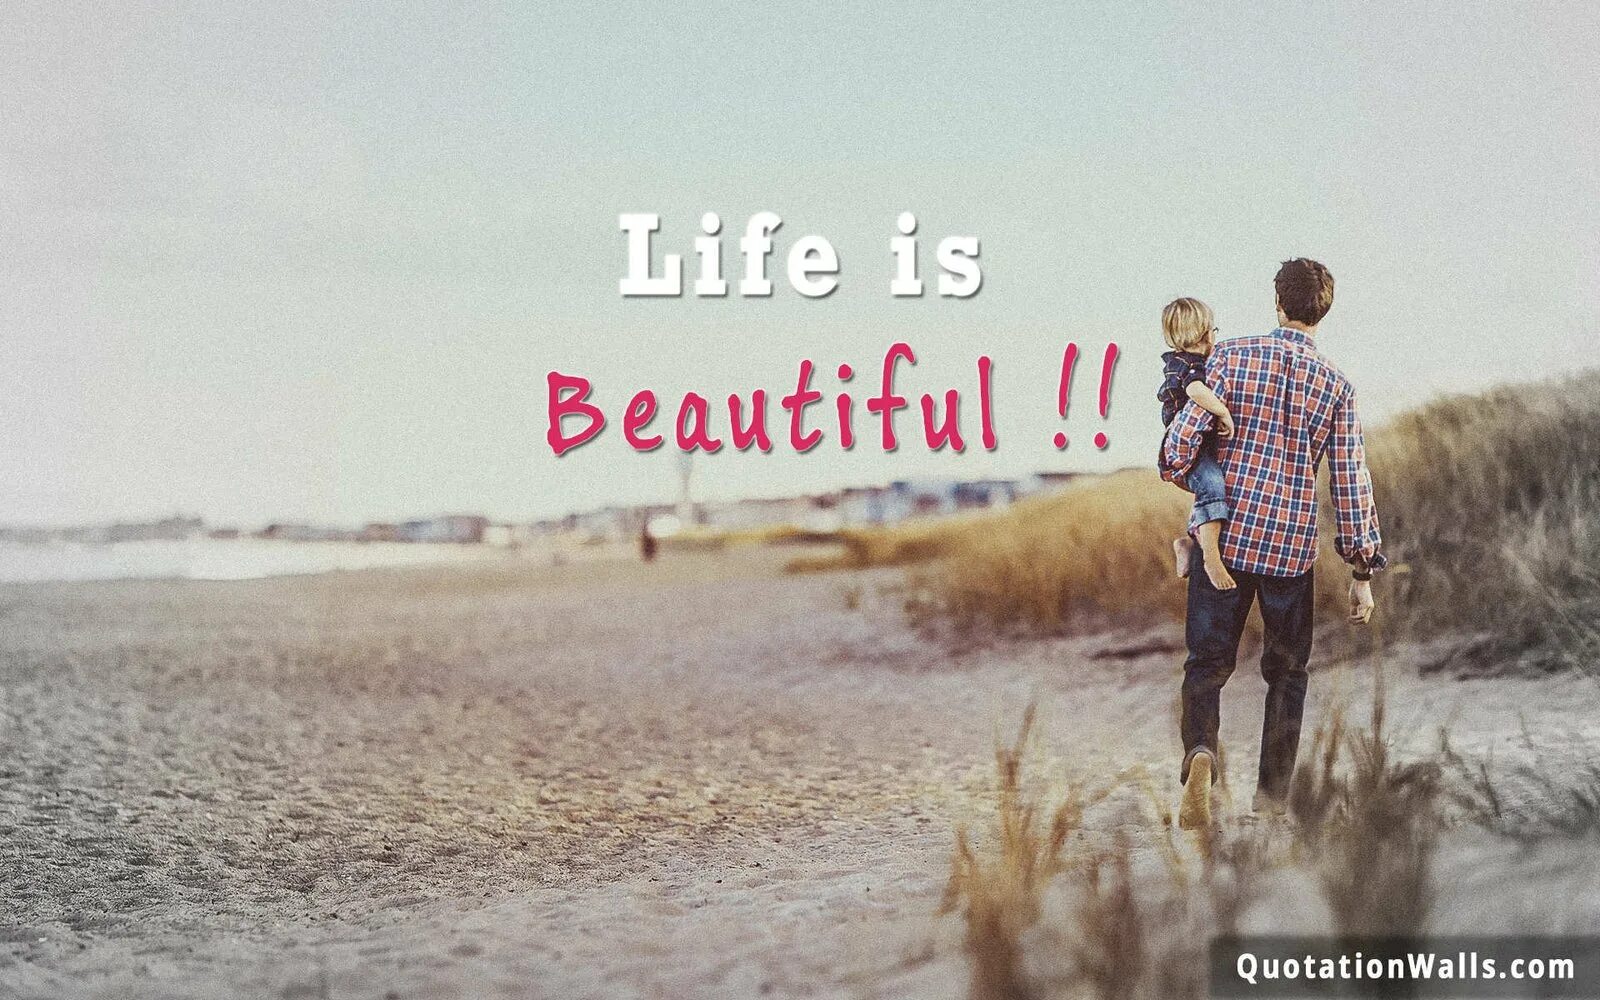 Both are beautiful. Life is beautiful. Life is beautiful картинки. Life is beautiful обои. Обои на телефон Life is beautiful.